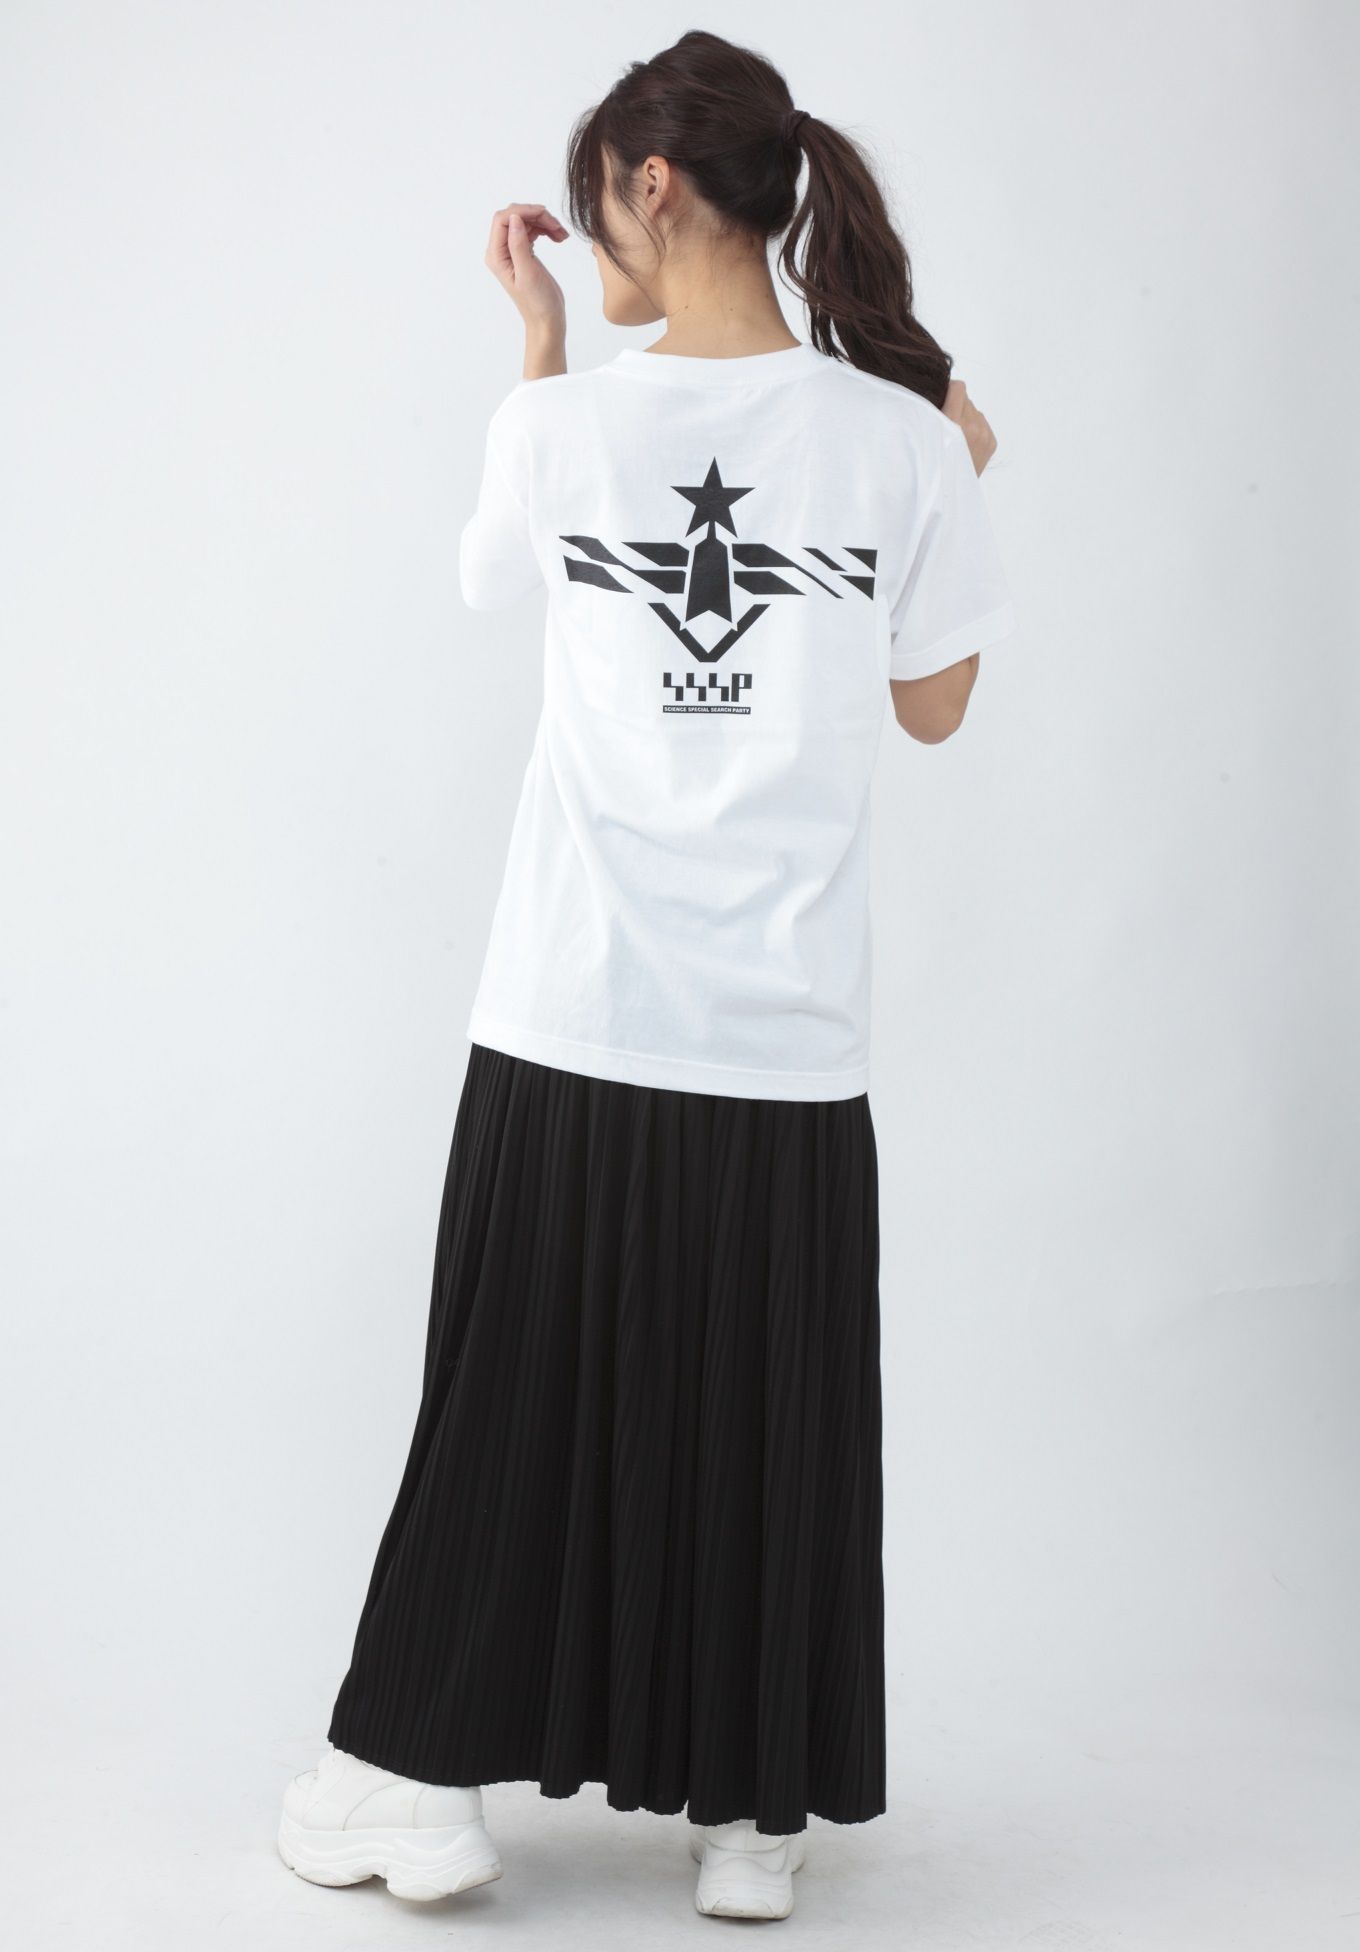 Animation Ultraman T-Shirt (SSSP mark)